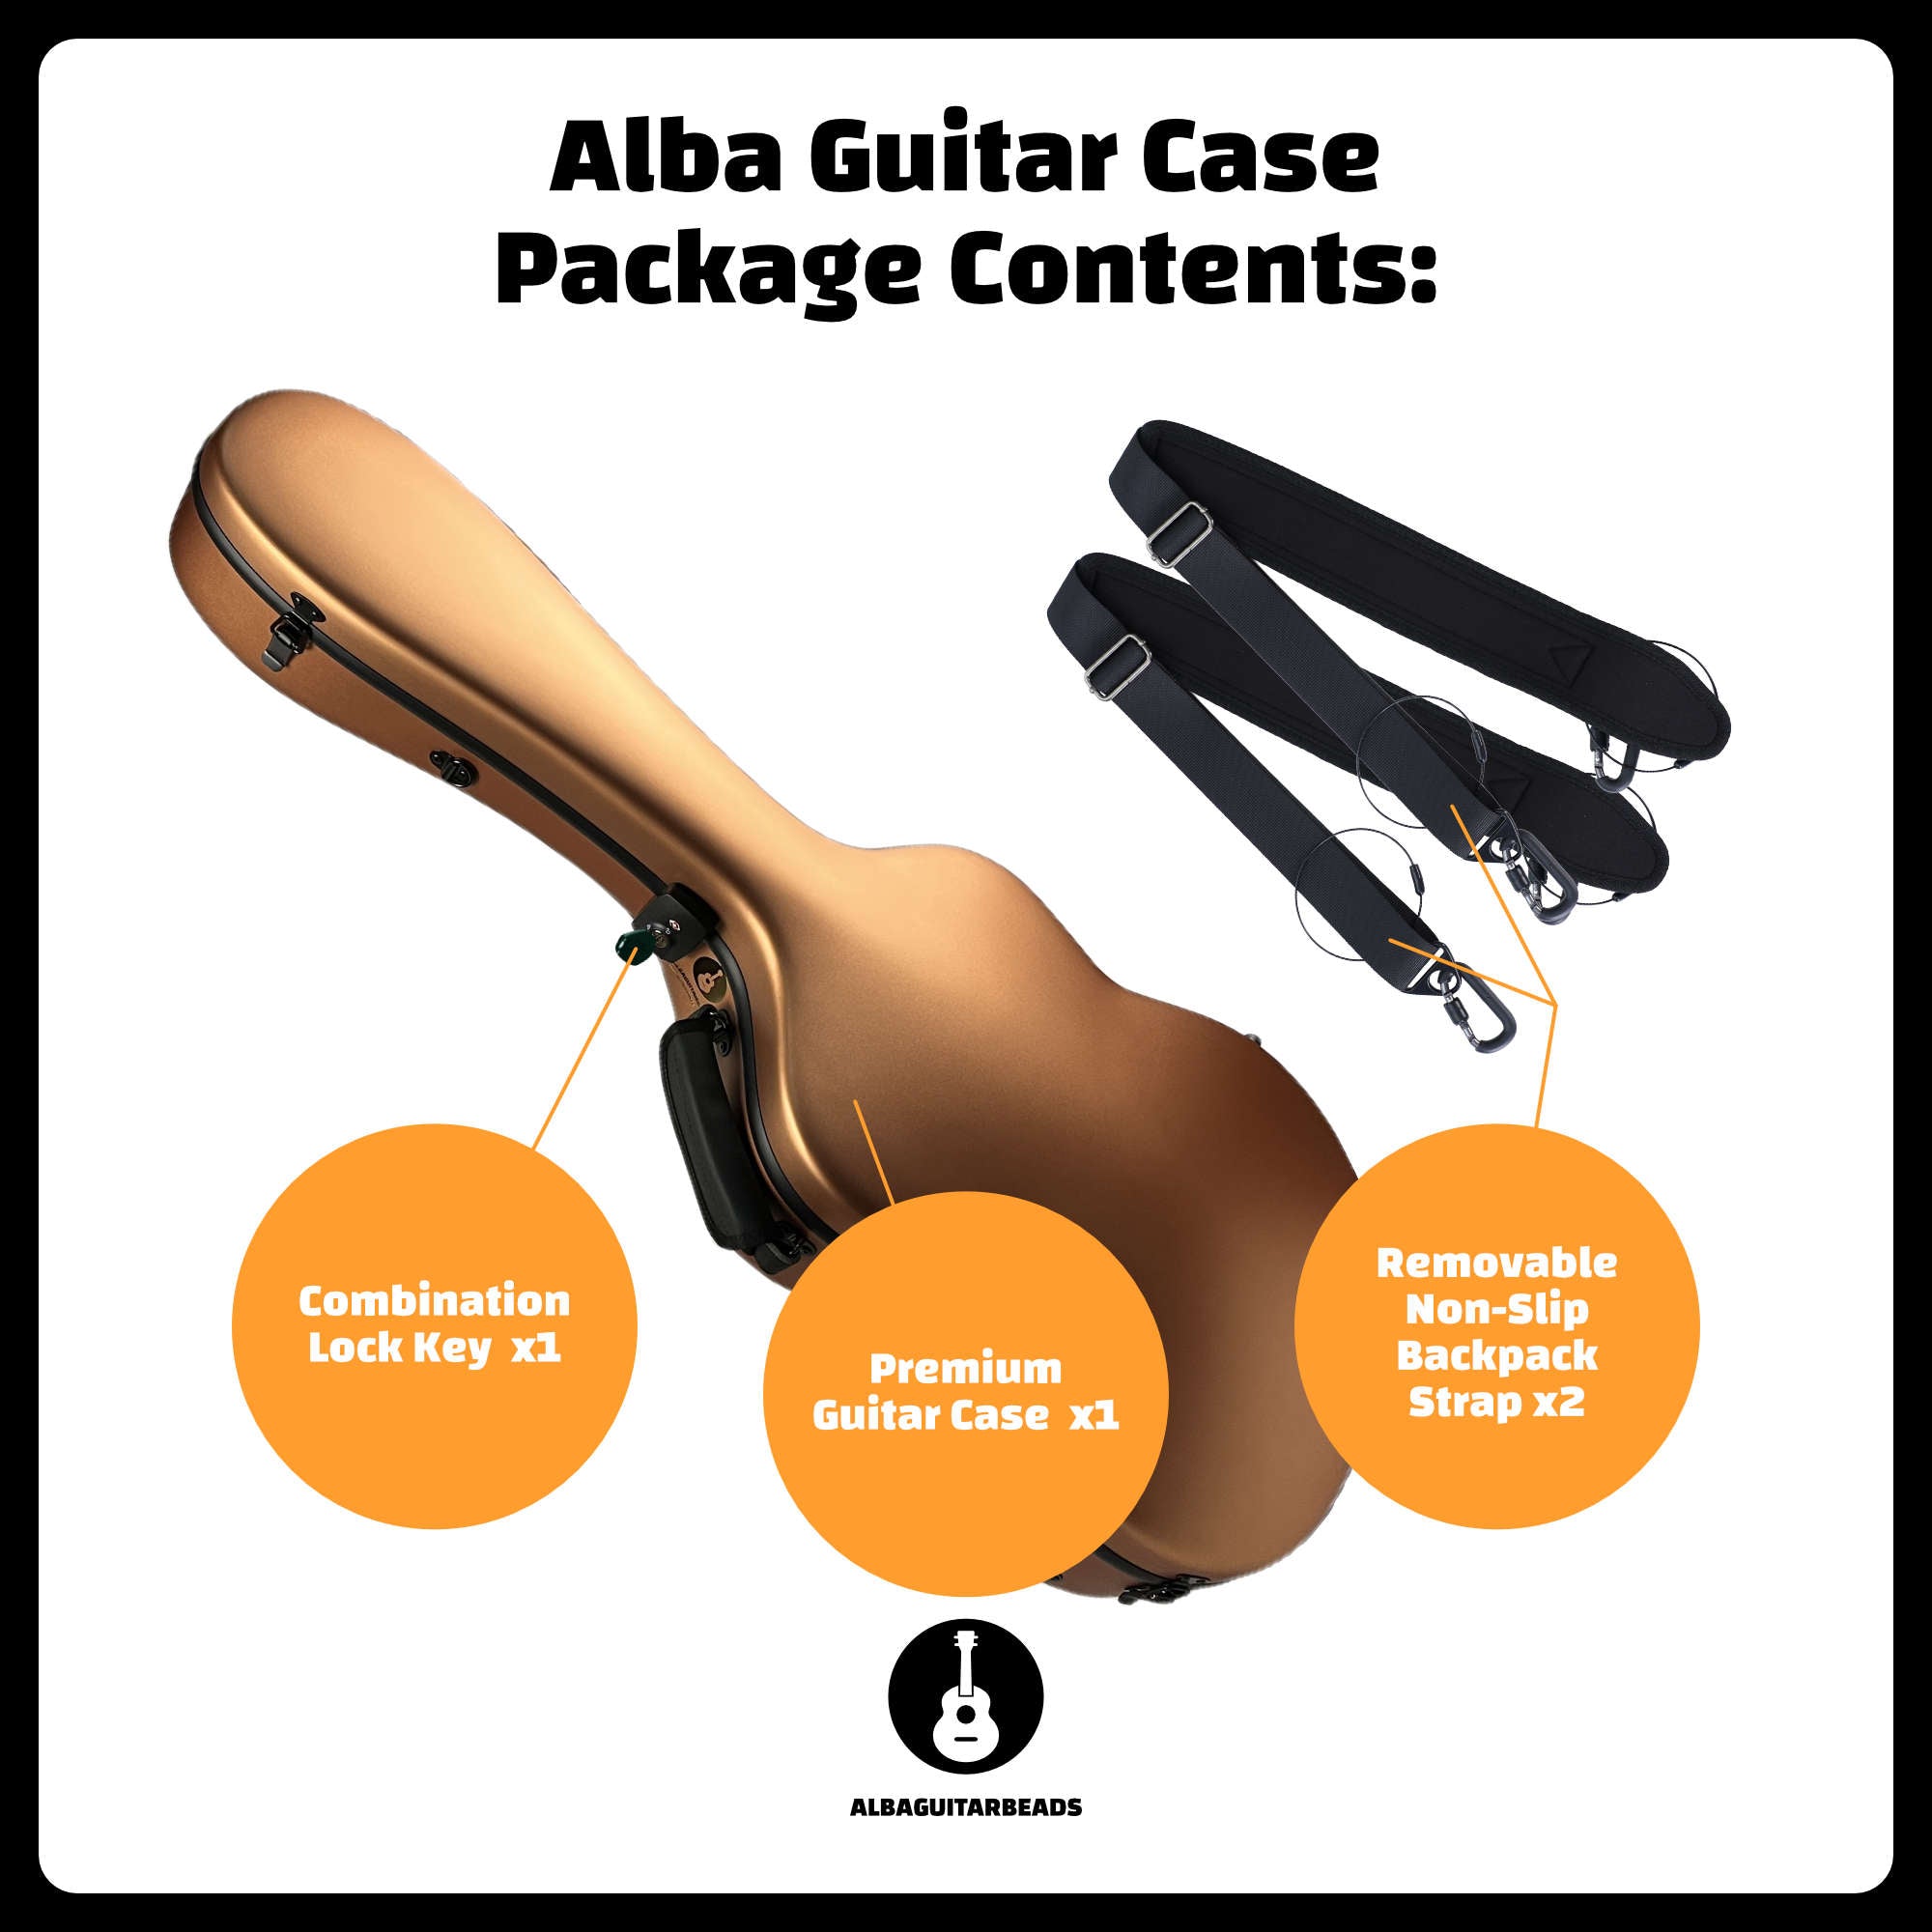 Carbon Alba Guitar Case Gold Matte for Classical Guitar Acoustic, Flamenco guitar case